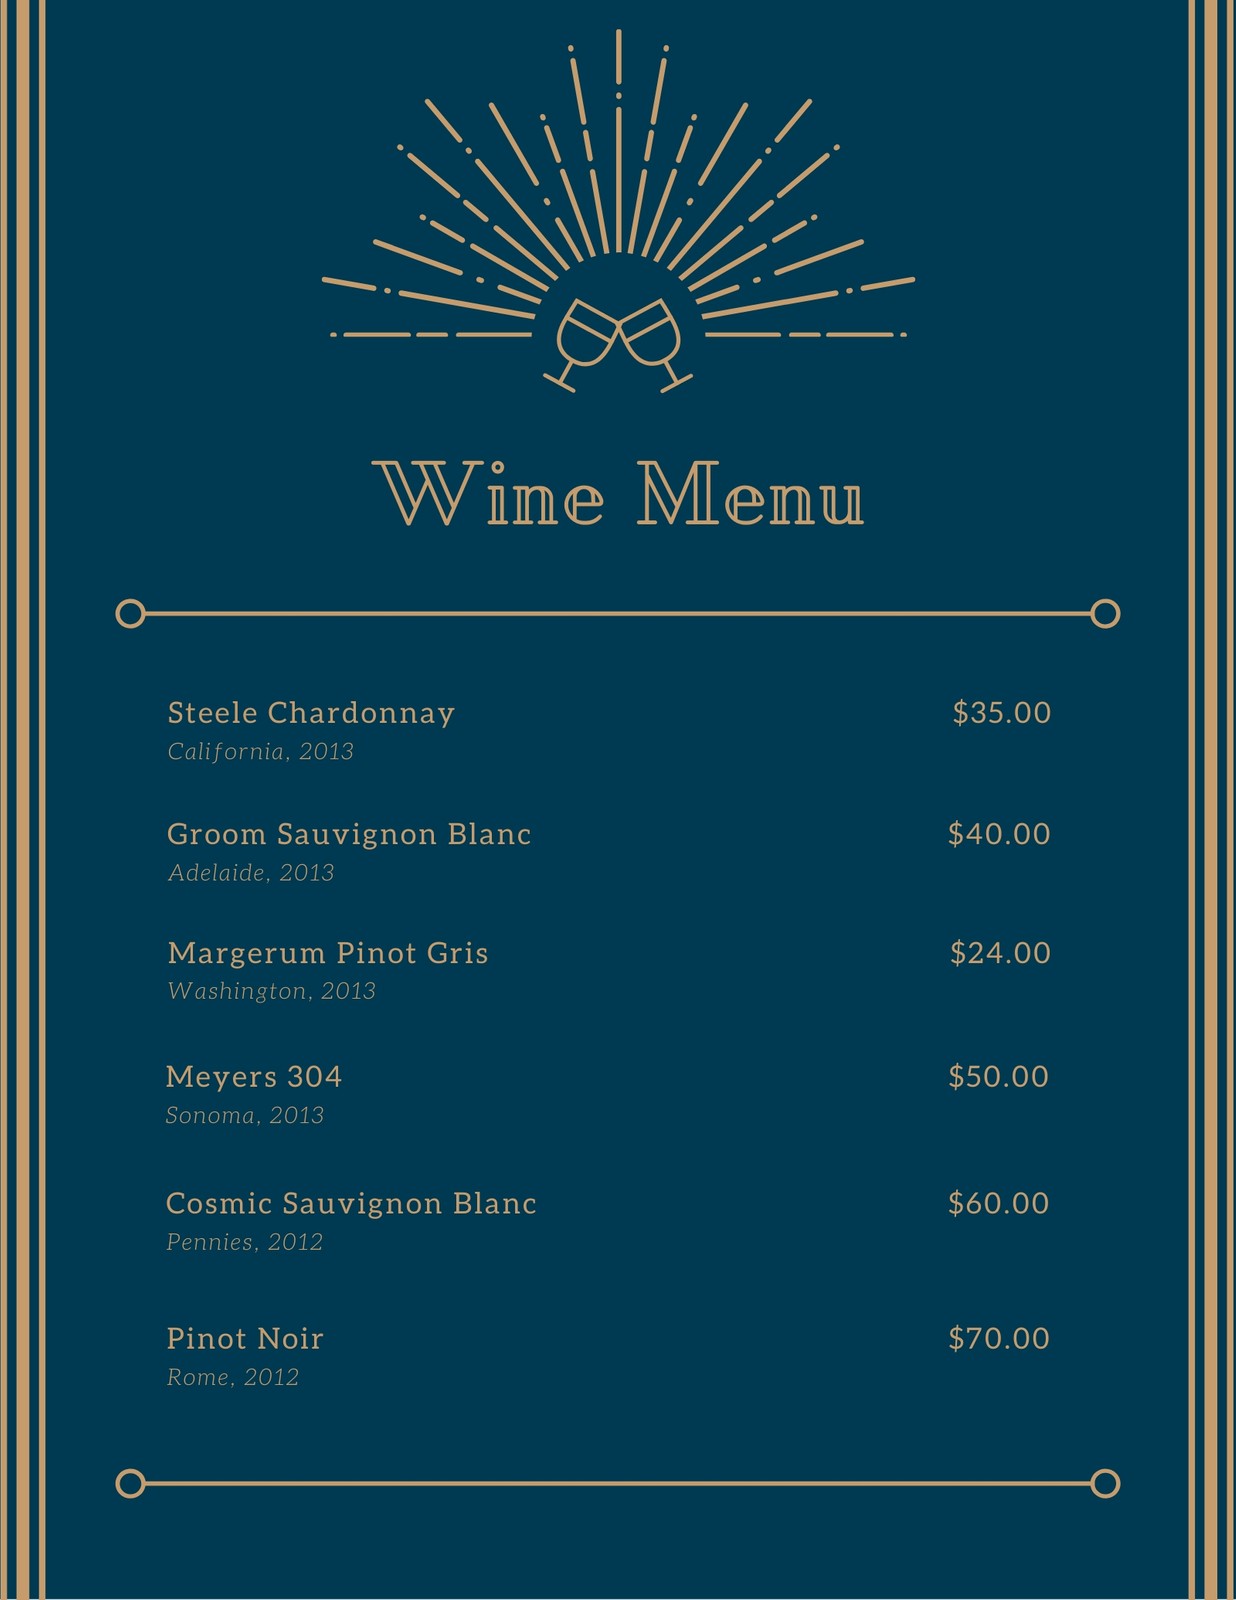 Free printable and customizable wine menu templates | Canva